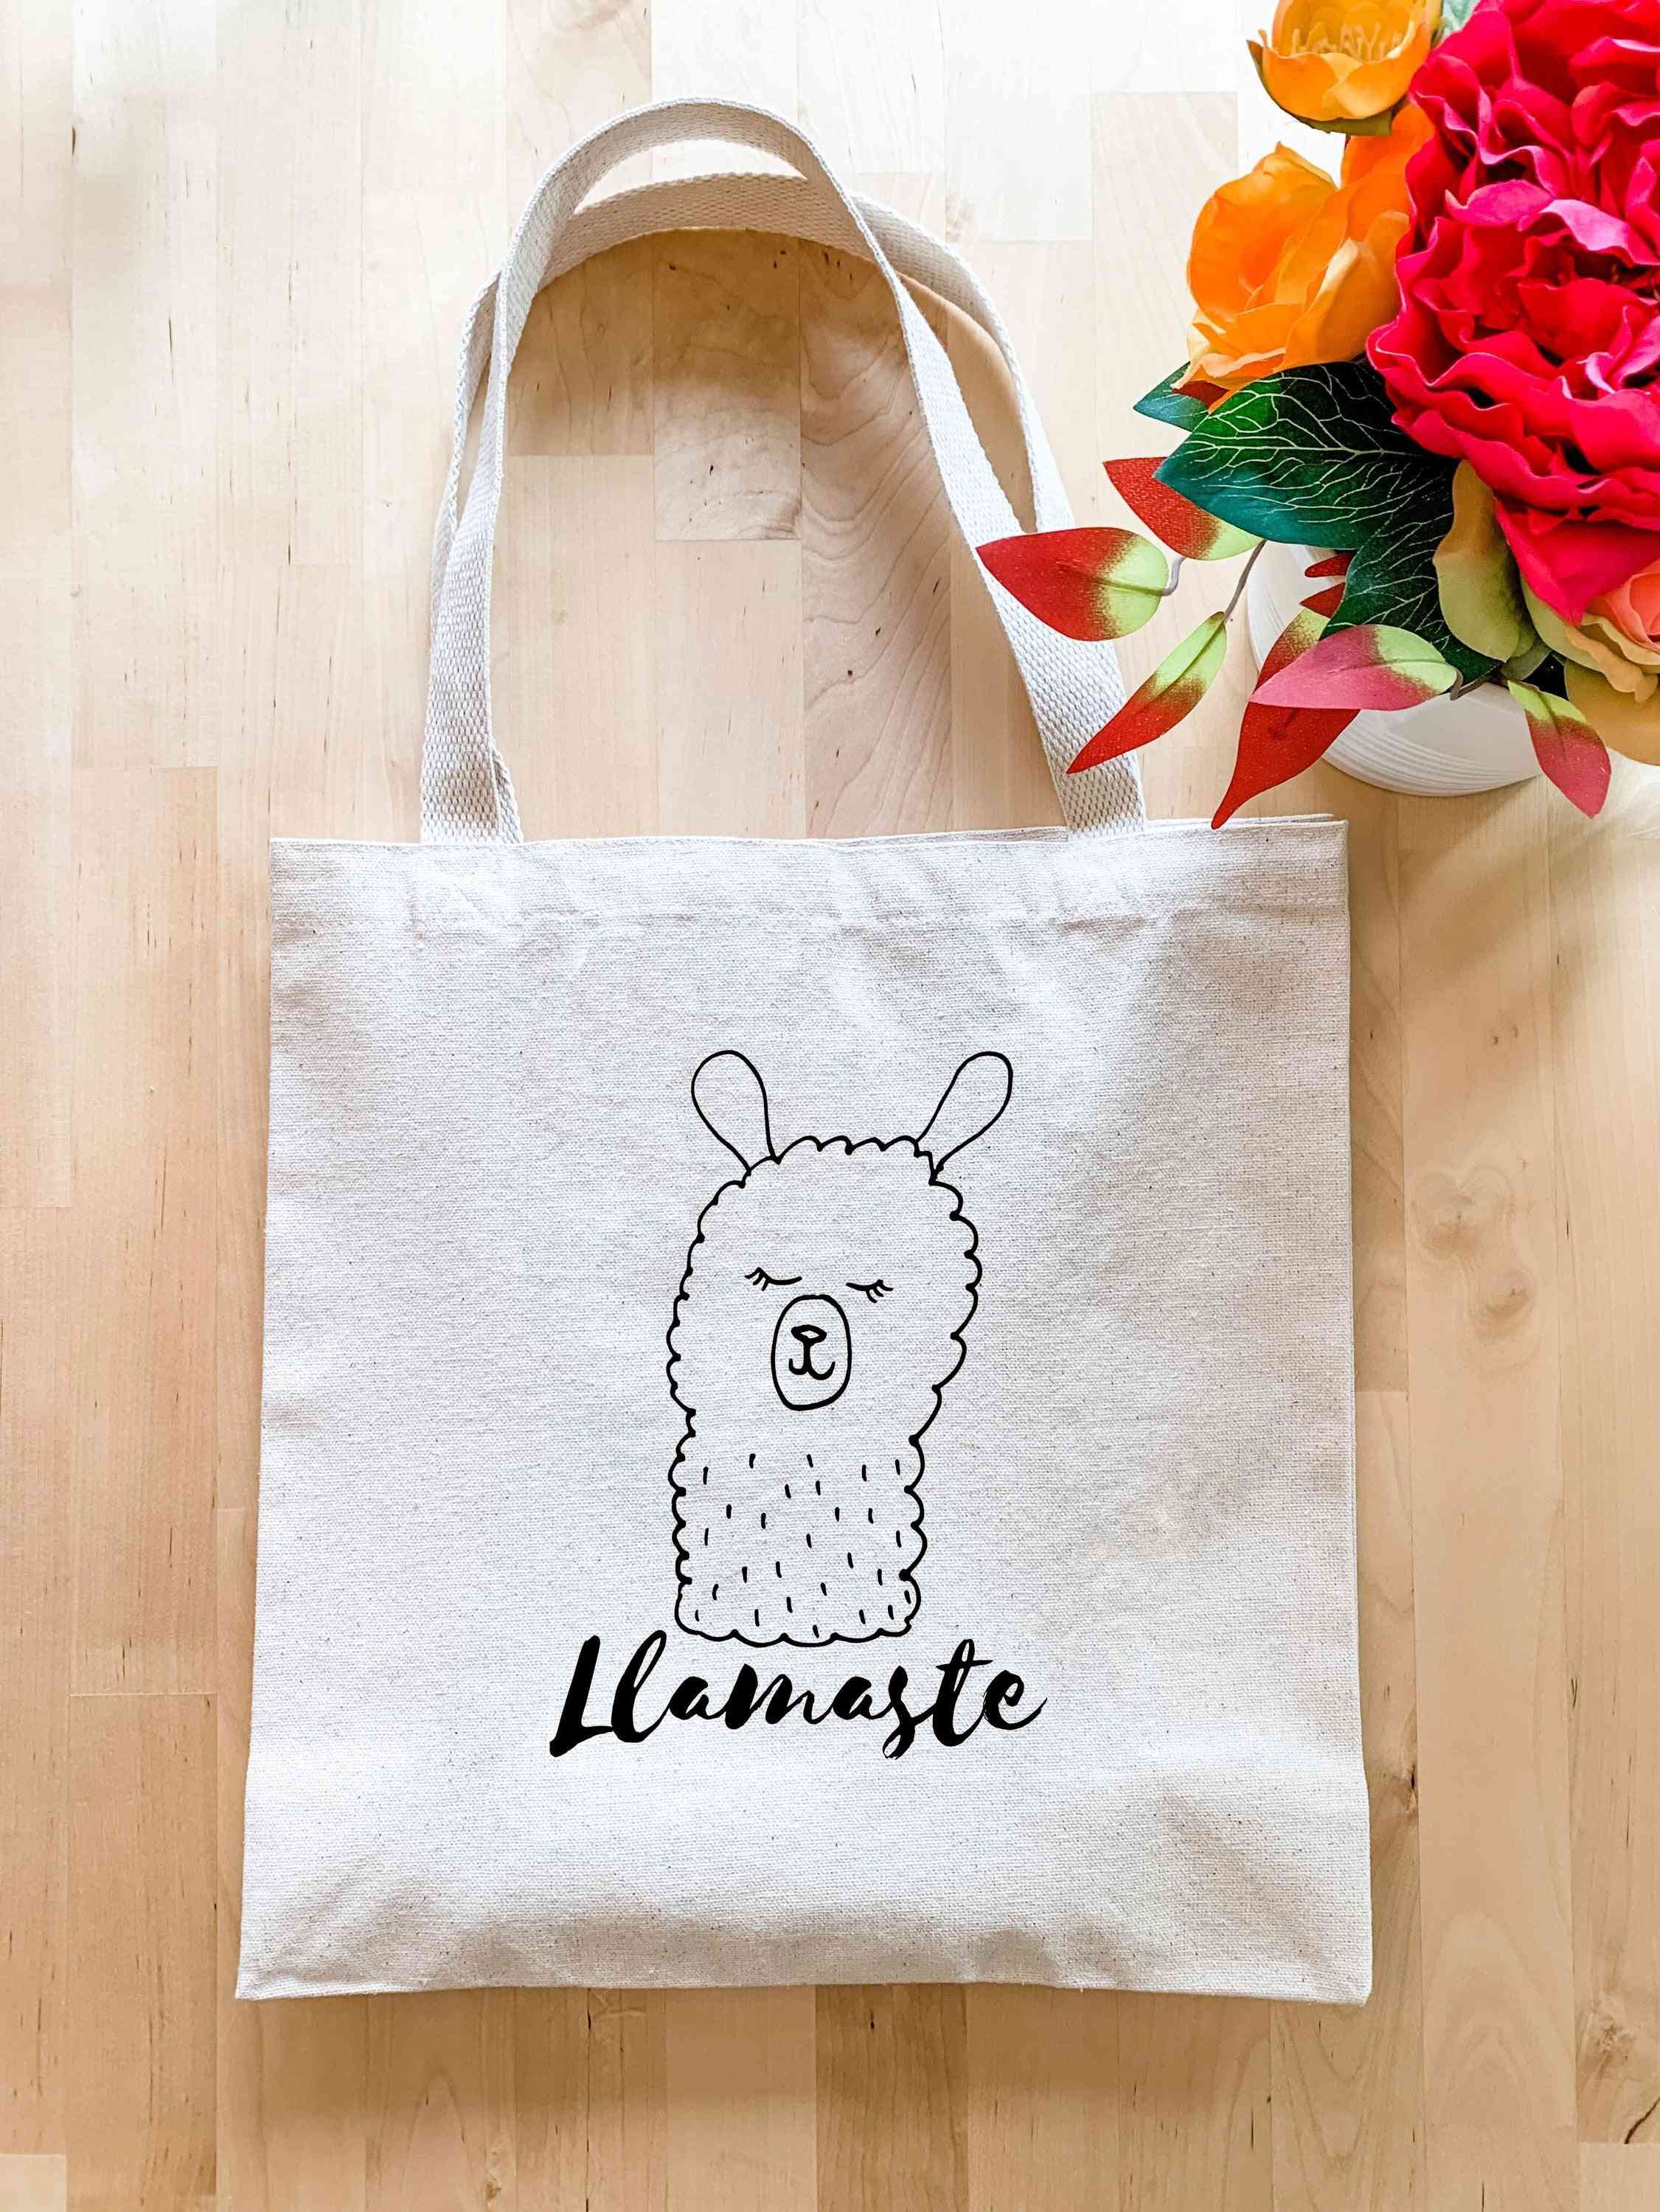 Llamaste - Tote Bag